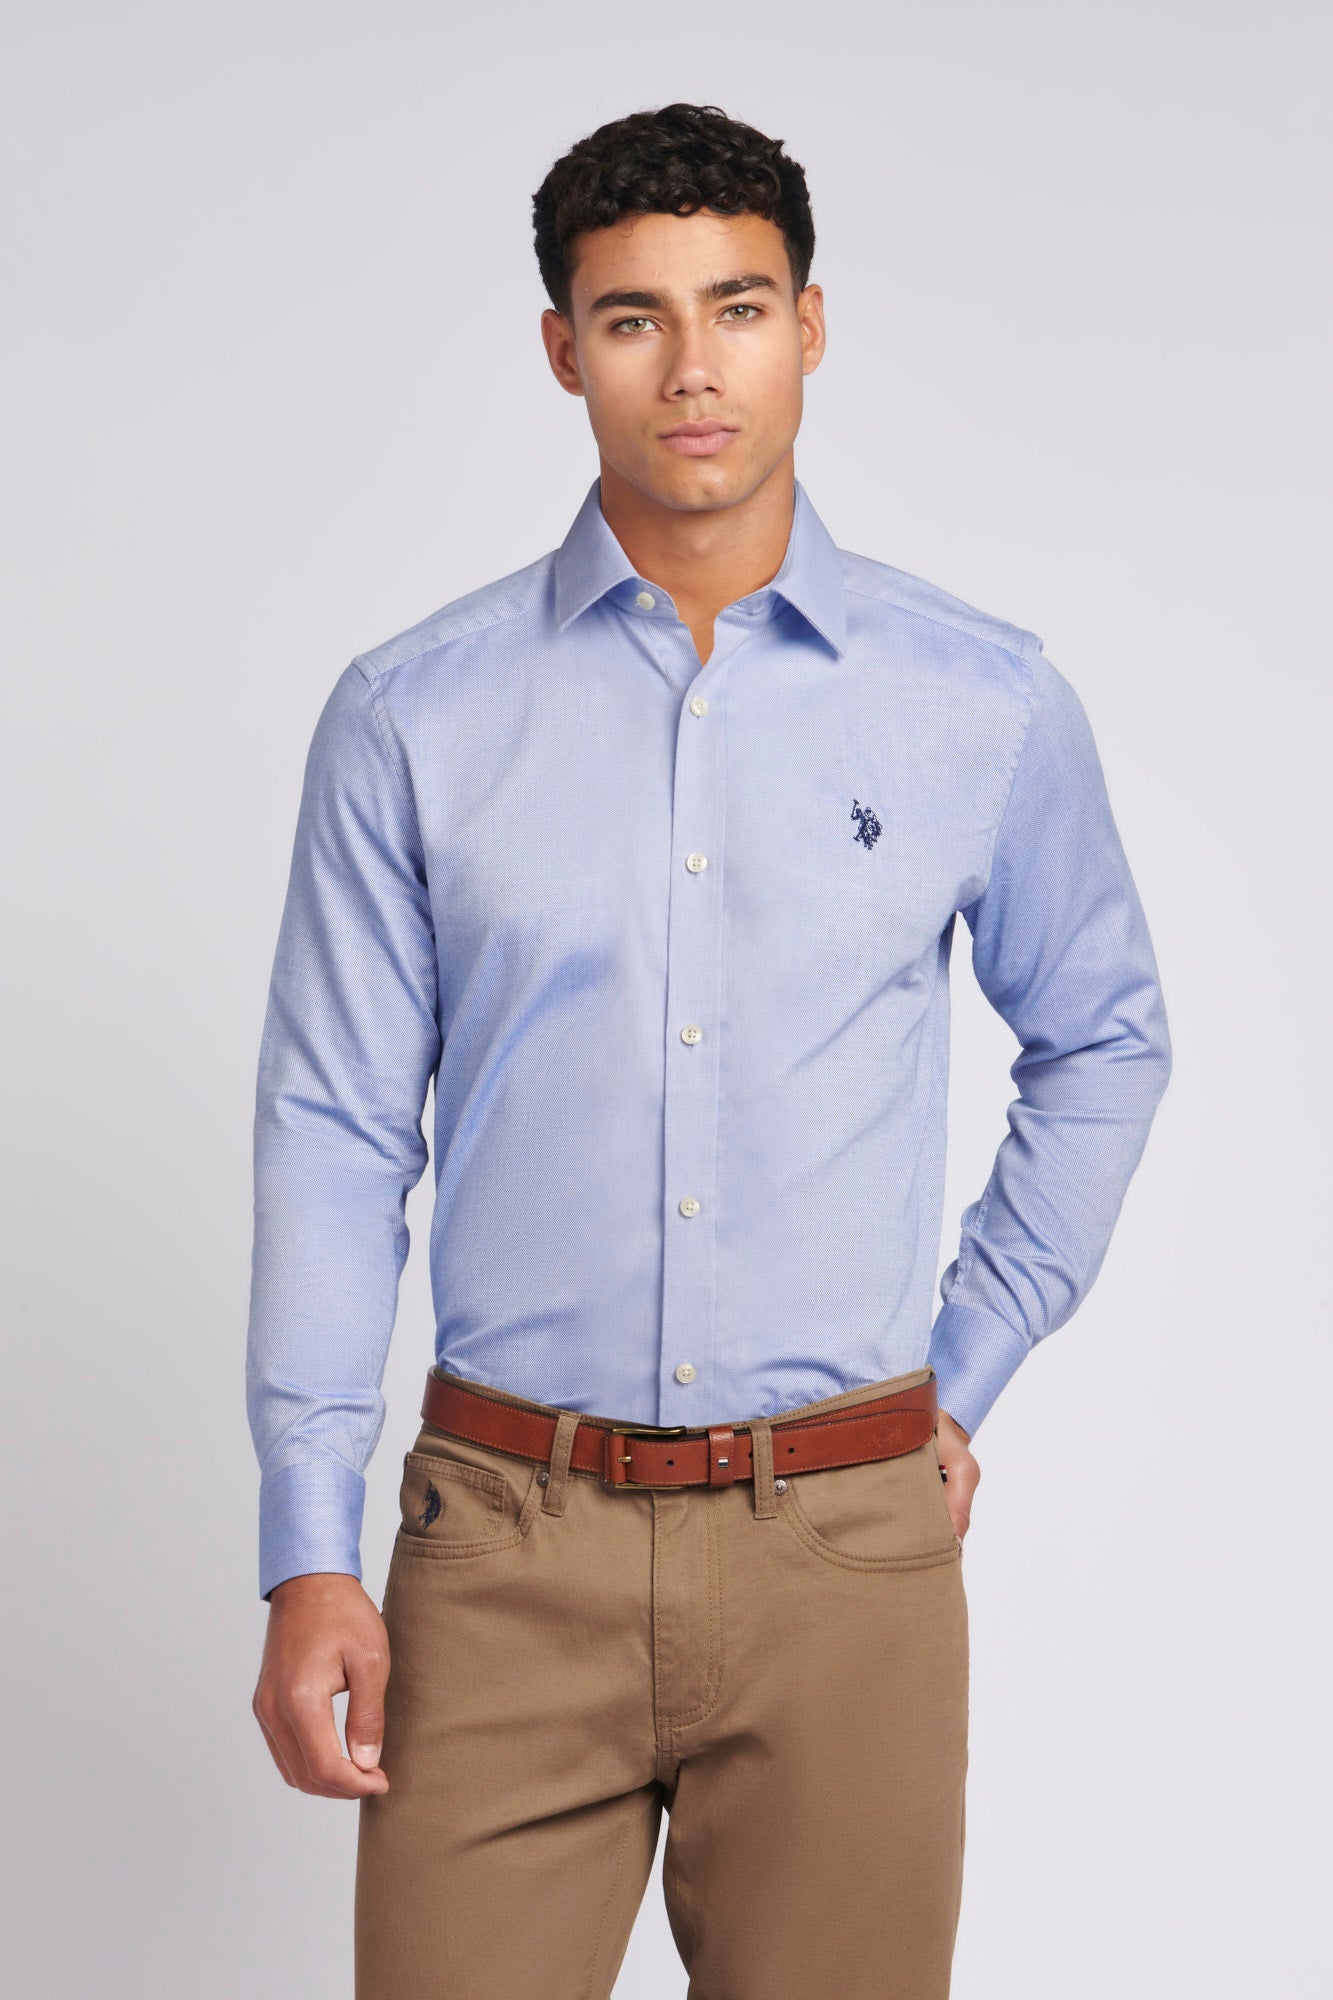 U.S. Polo Assn. Mens Long Sleeve Dobby Texture Shirt in Navy Blue